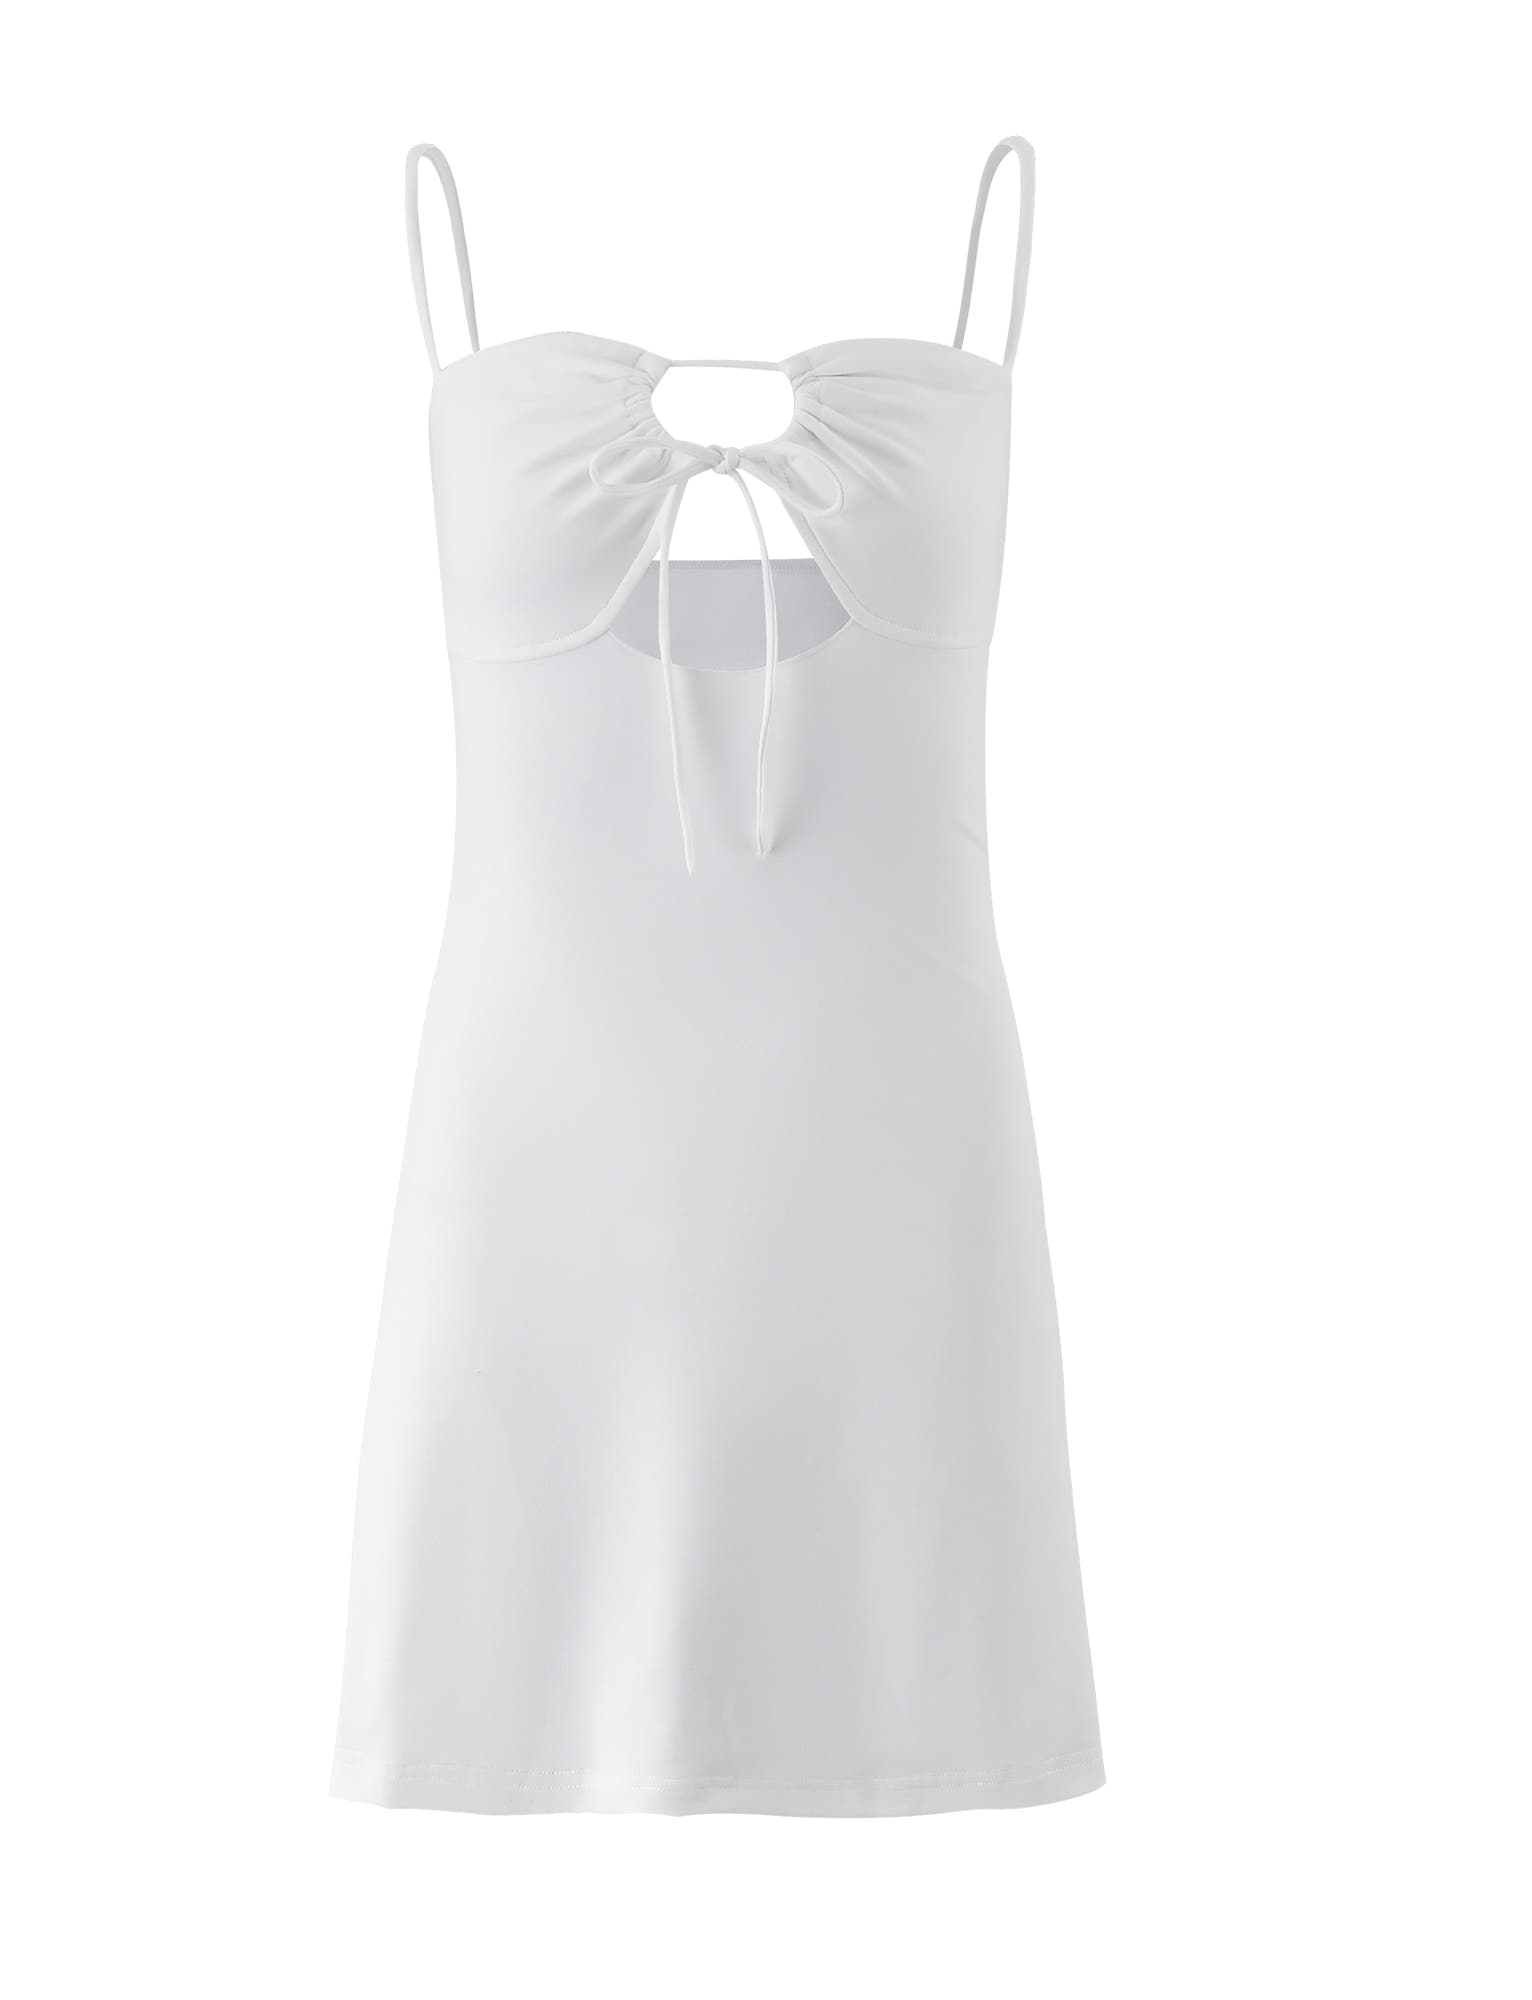 CORRINE DRESS - WHITE